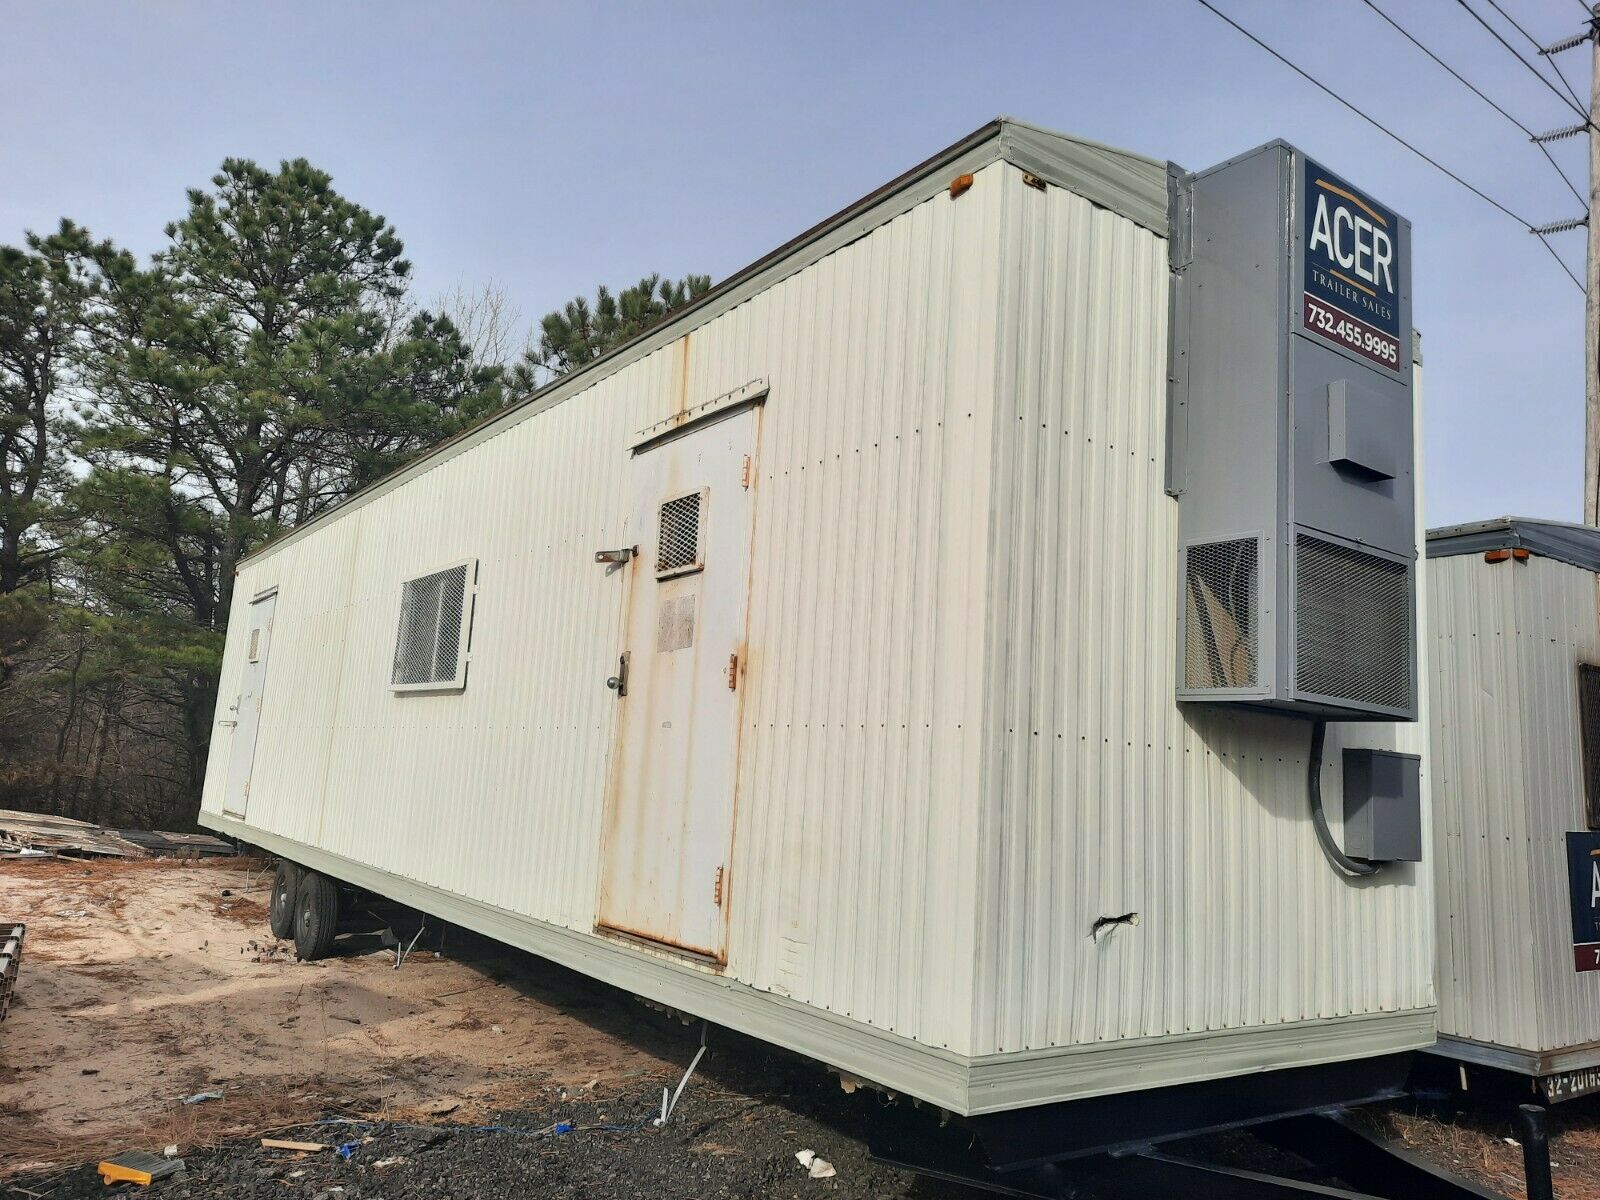 An 8-by-40 foot storage/job site trailer. (Photo: eBay)